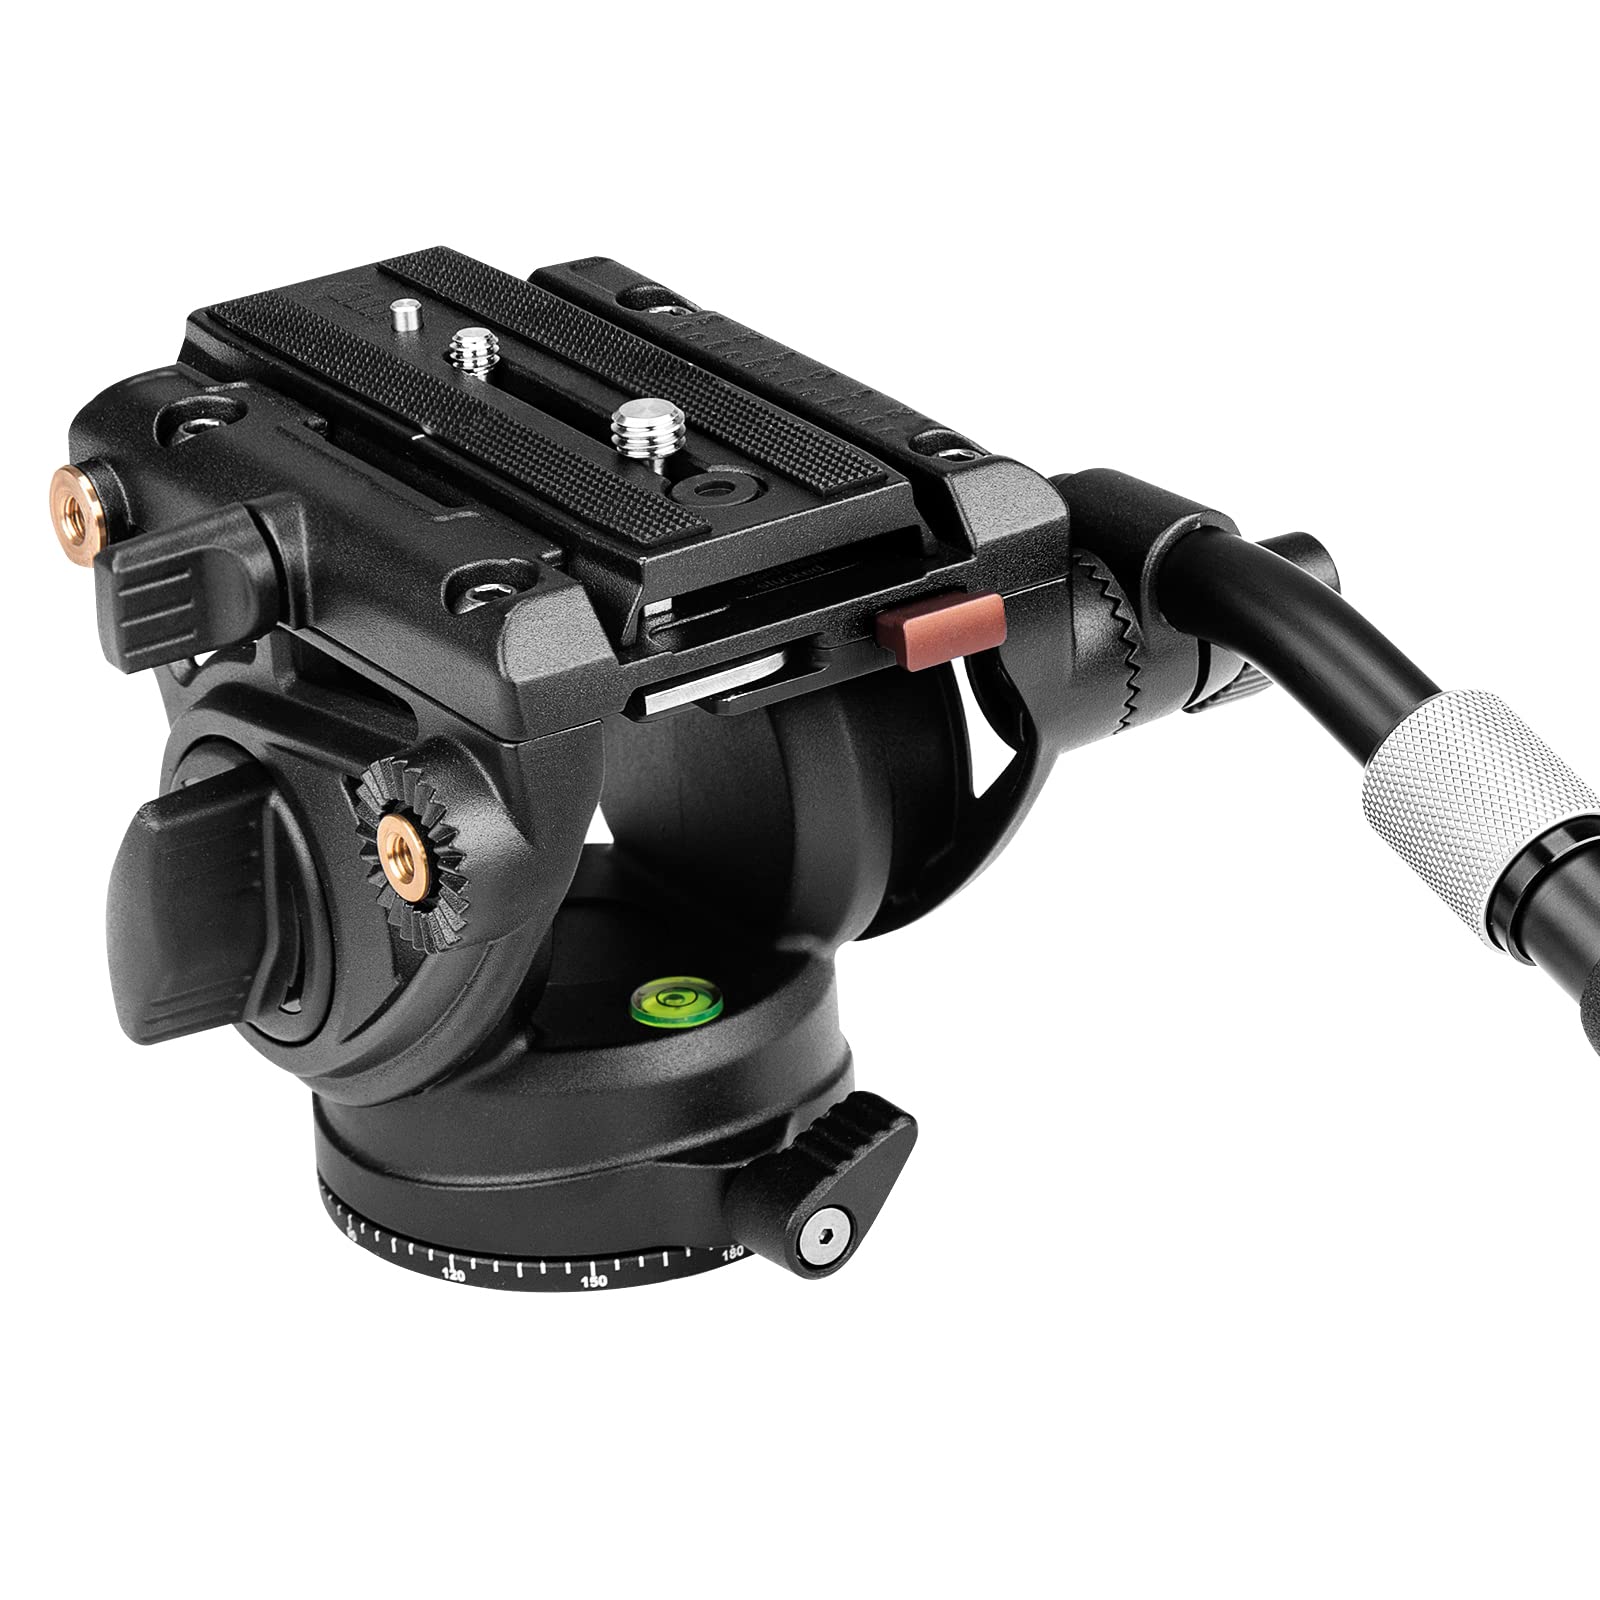 Cayer K6 Fluid Head, Metal Camera Tripod Head with Adjustable Pan Handle, Heavy Duty Video Tripod Pan Tilt Head for Video Camera